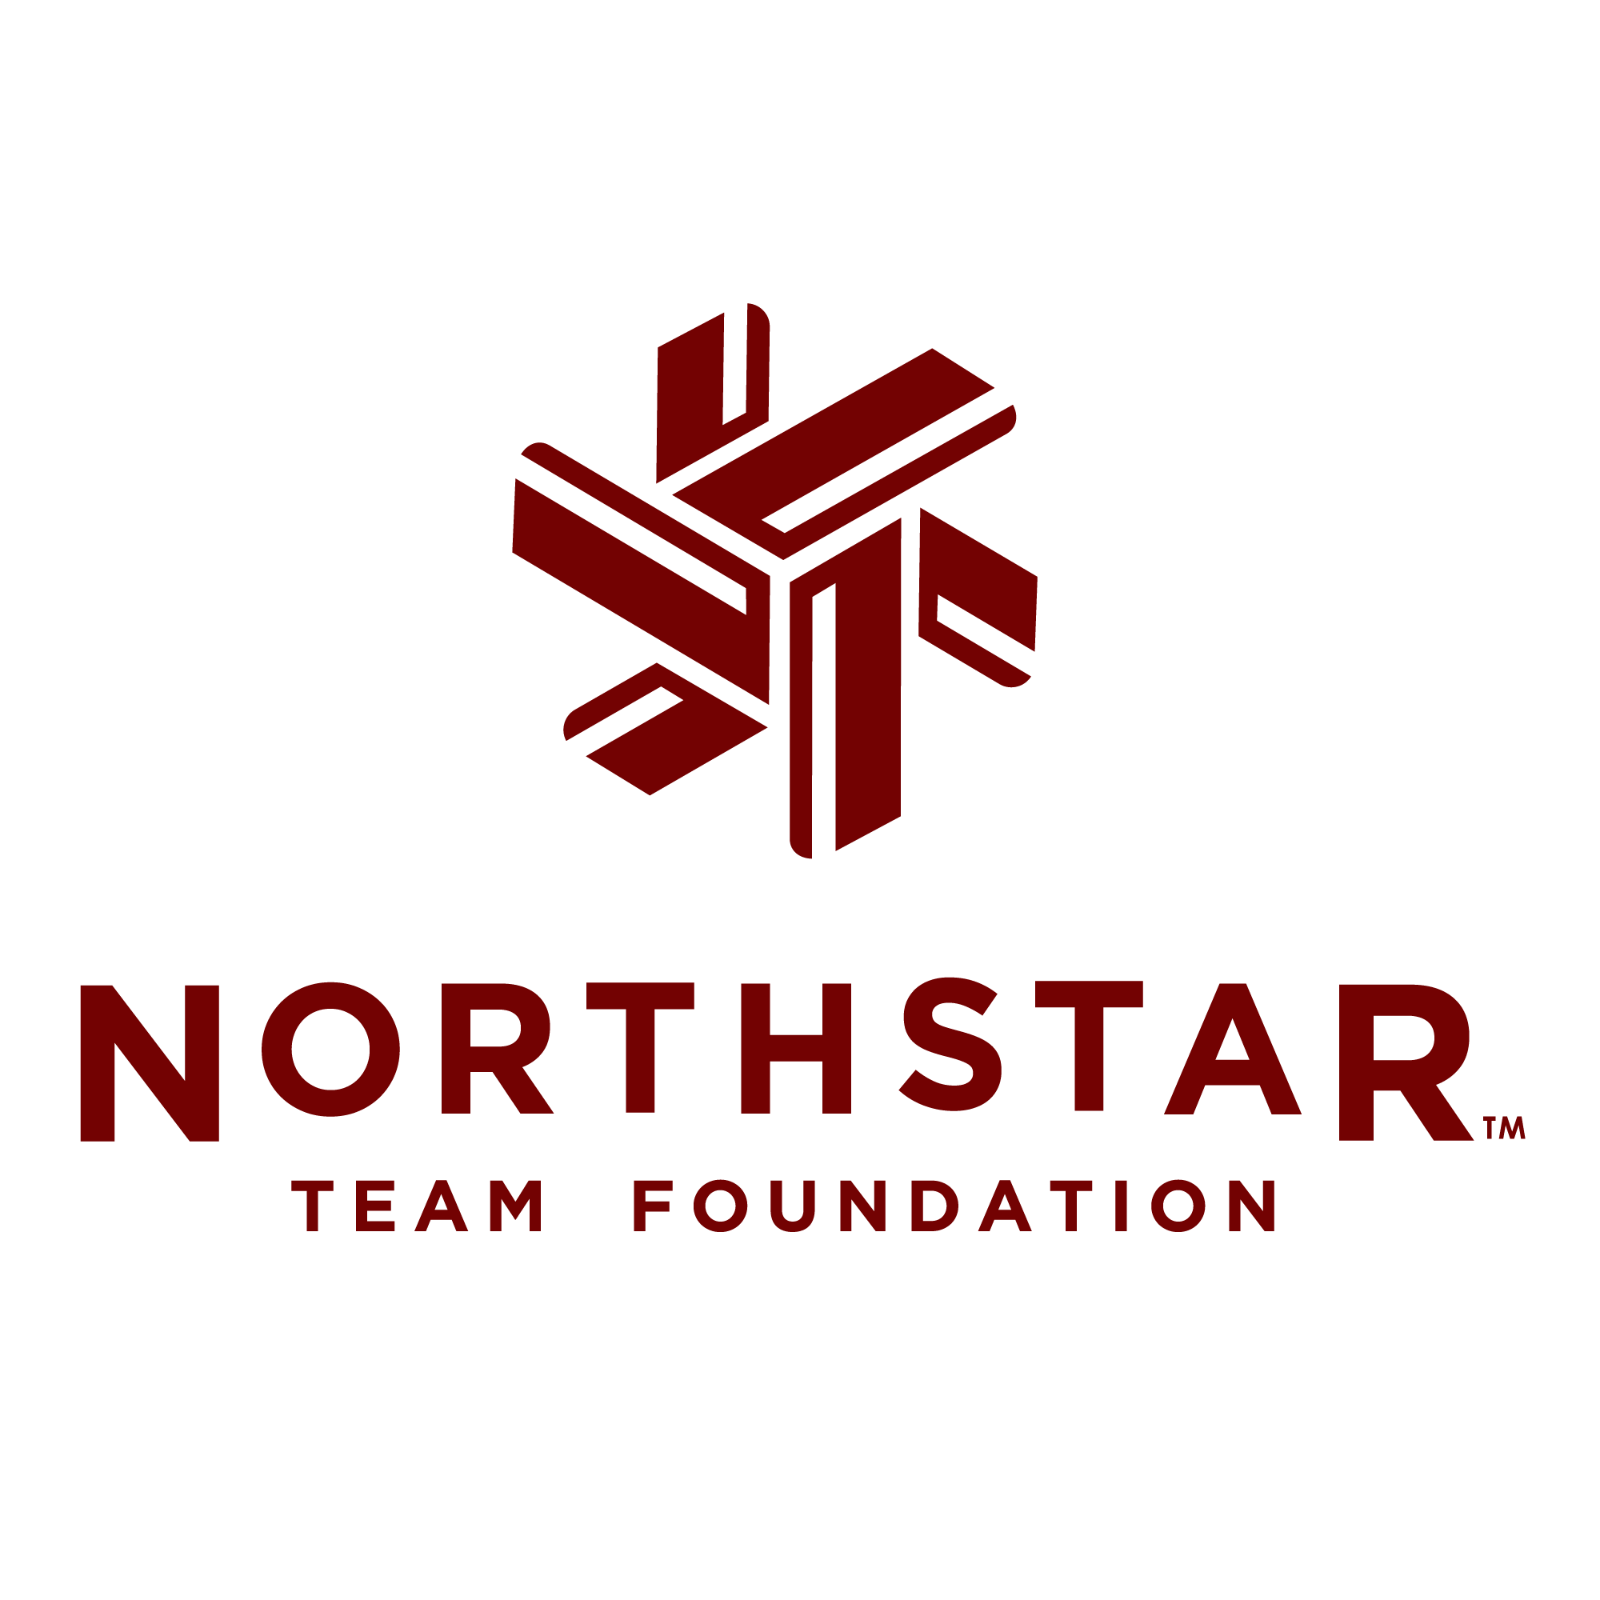 The-Northstar-Team-Foundation%2C-logo%2C-MARSALA.png